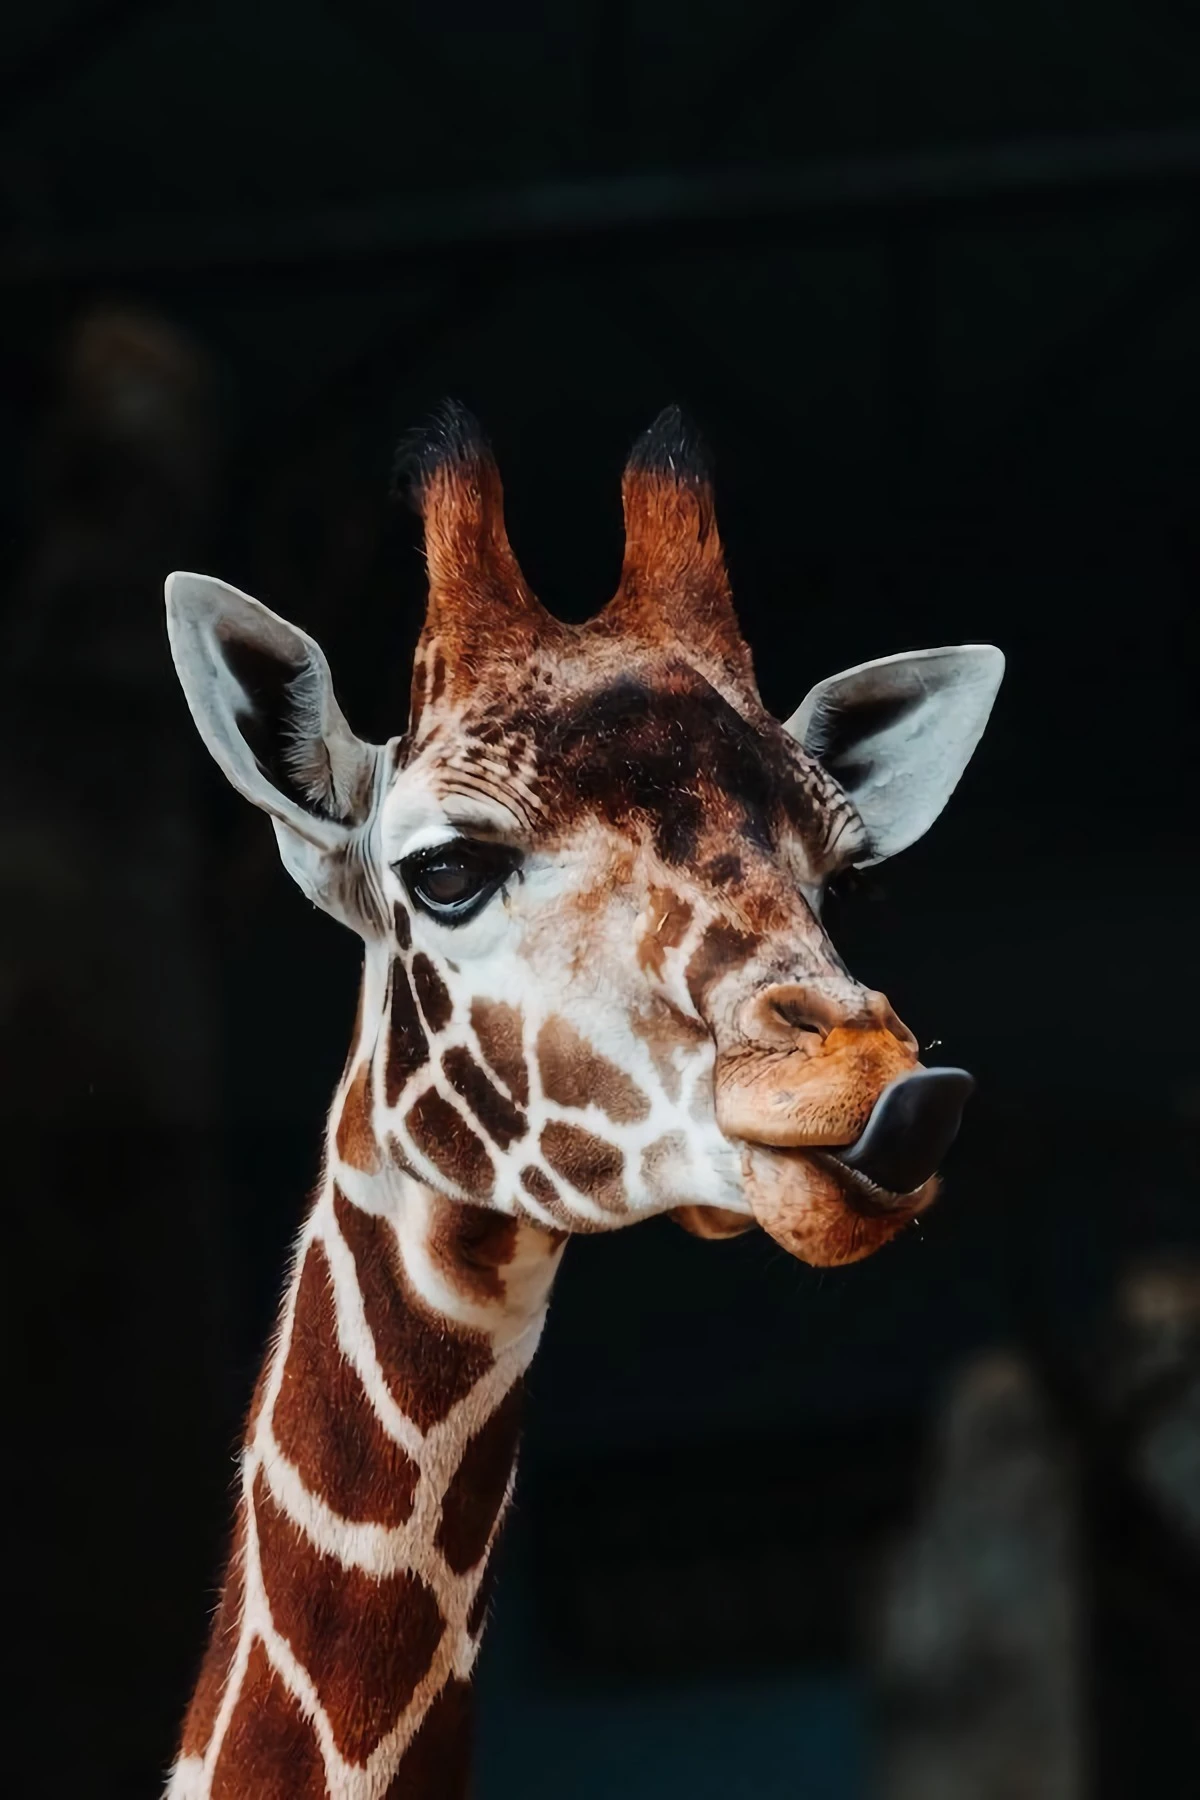 giraffe sticking its tongue out